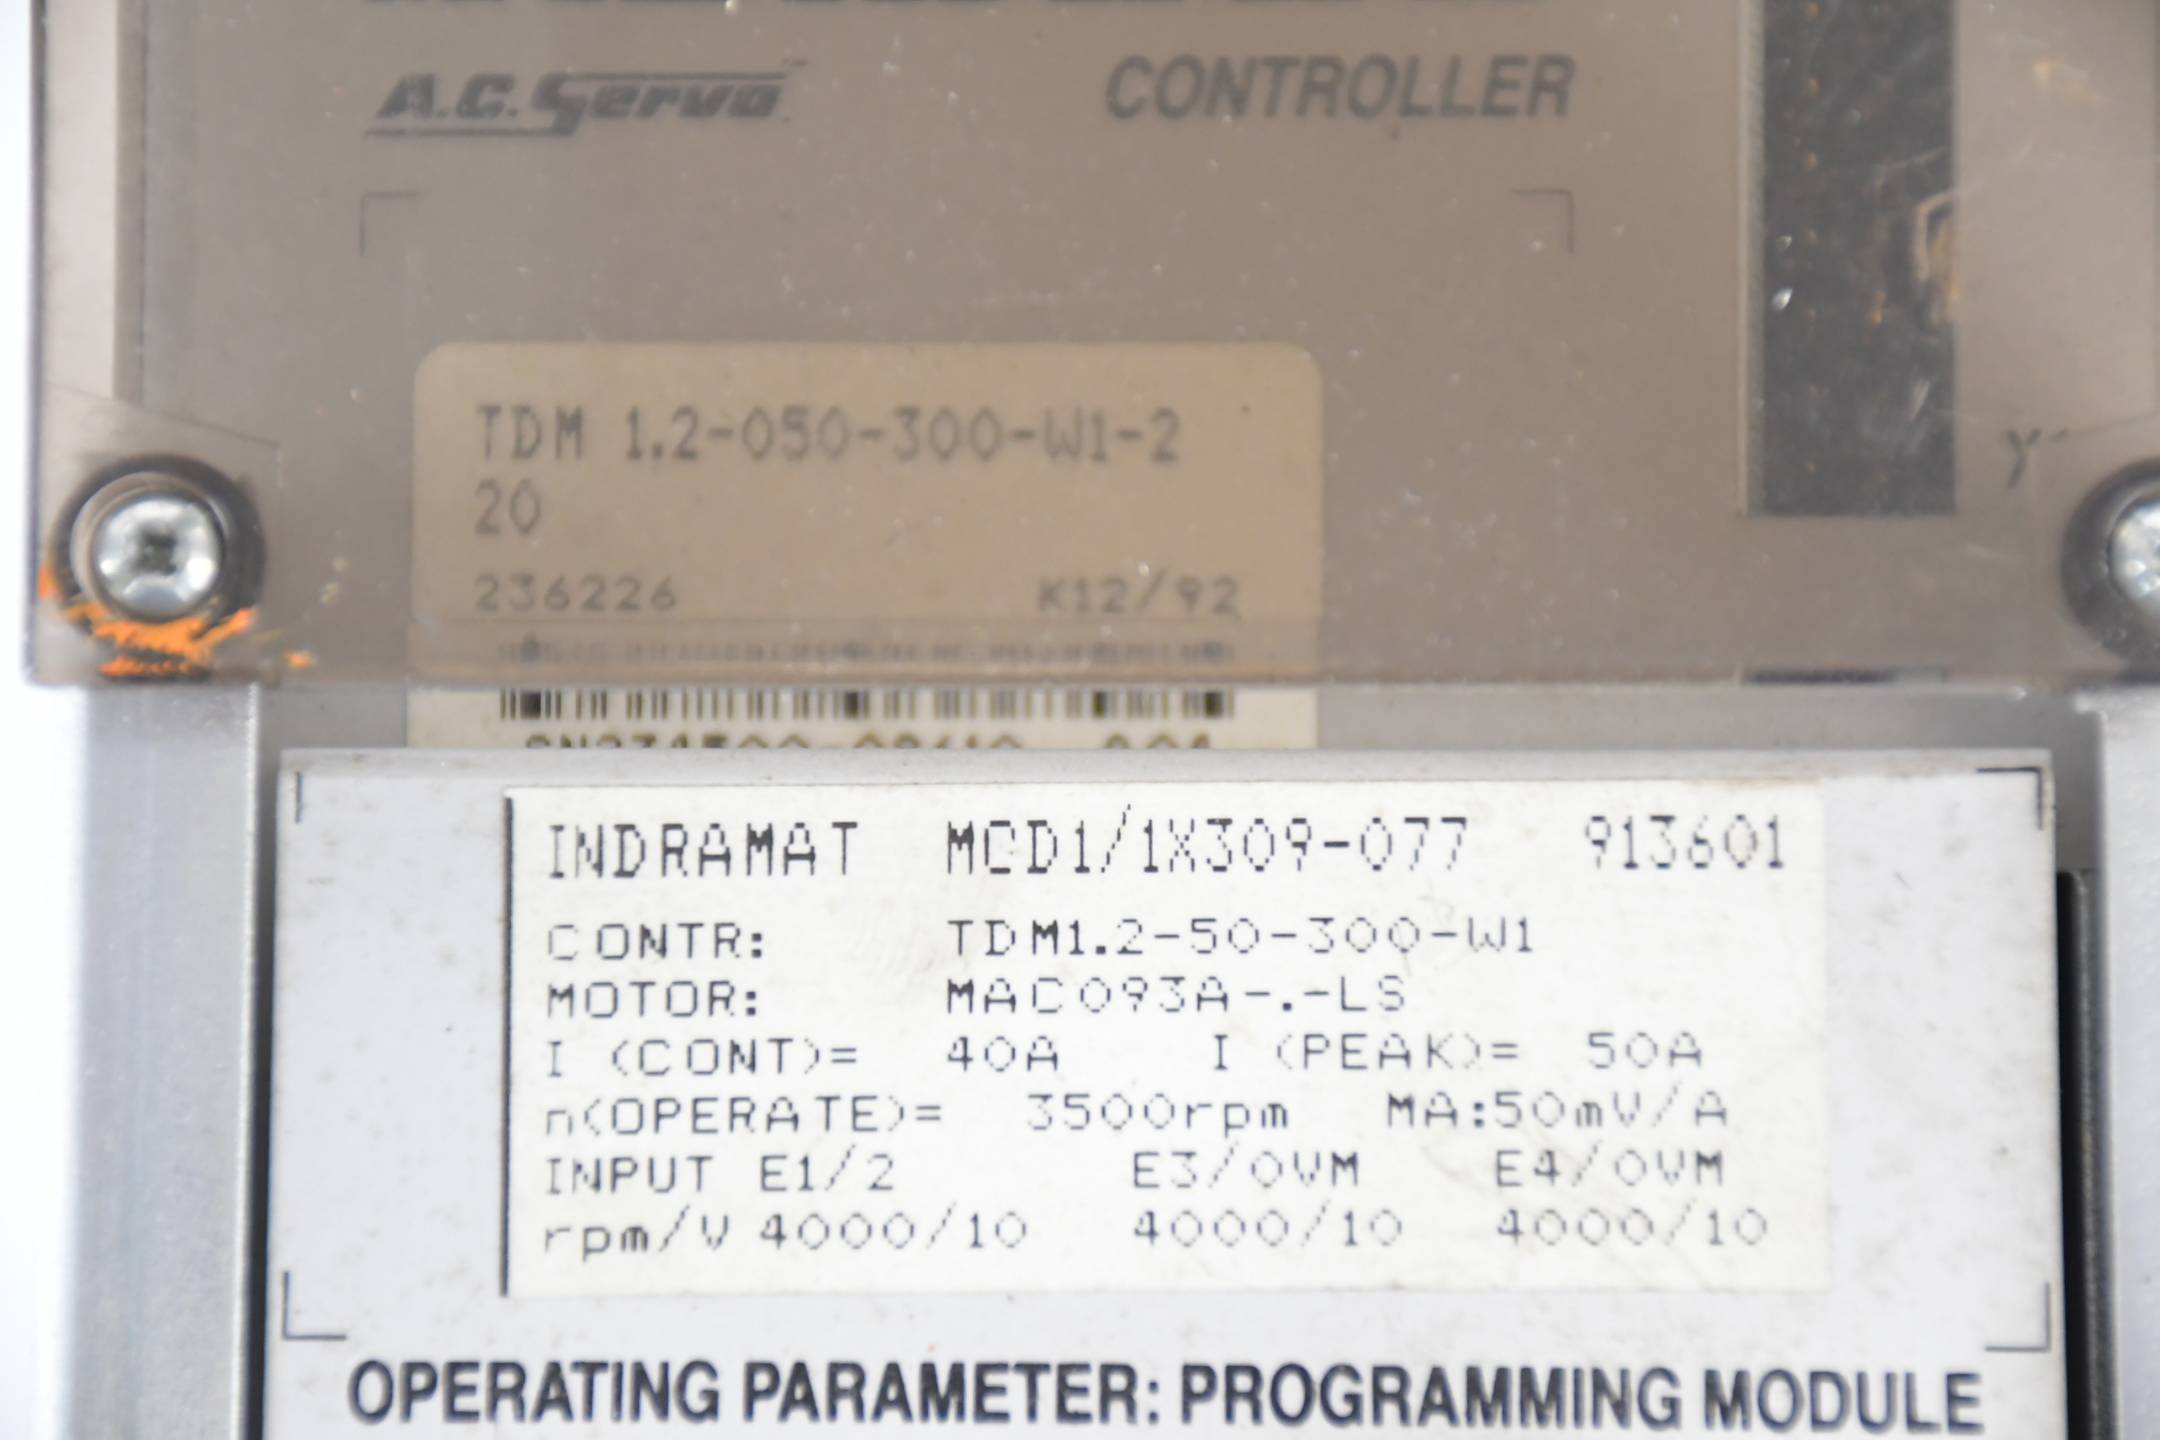 Indramat A.C. Servo Controller TDM 1.2-050-300-W1-220 inkl. MOD1/1X309-077